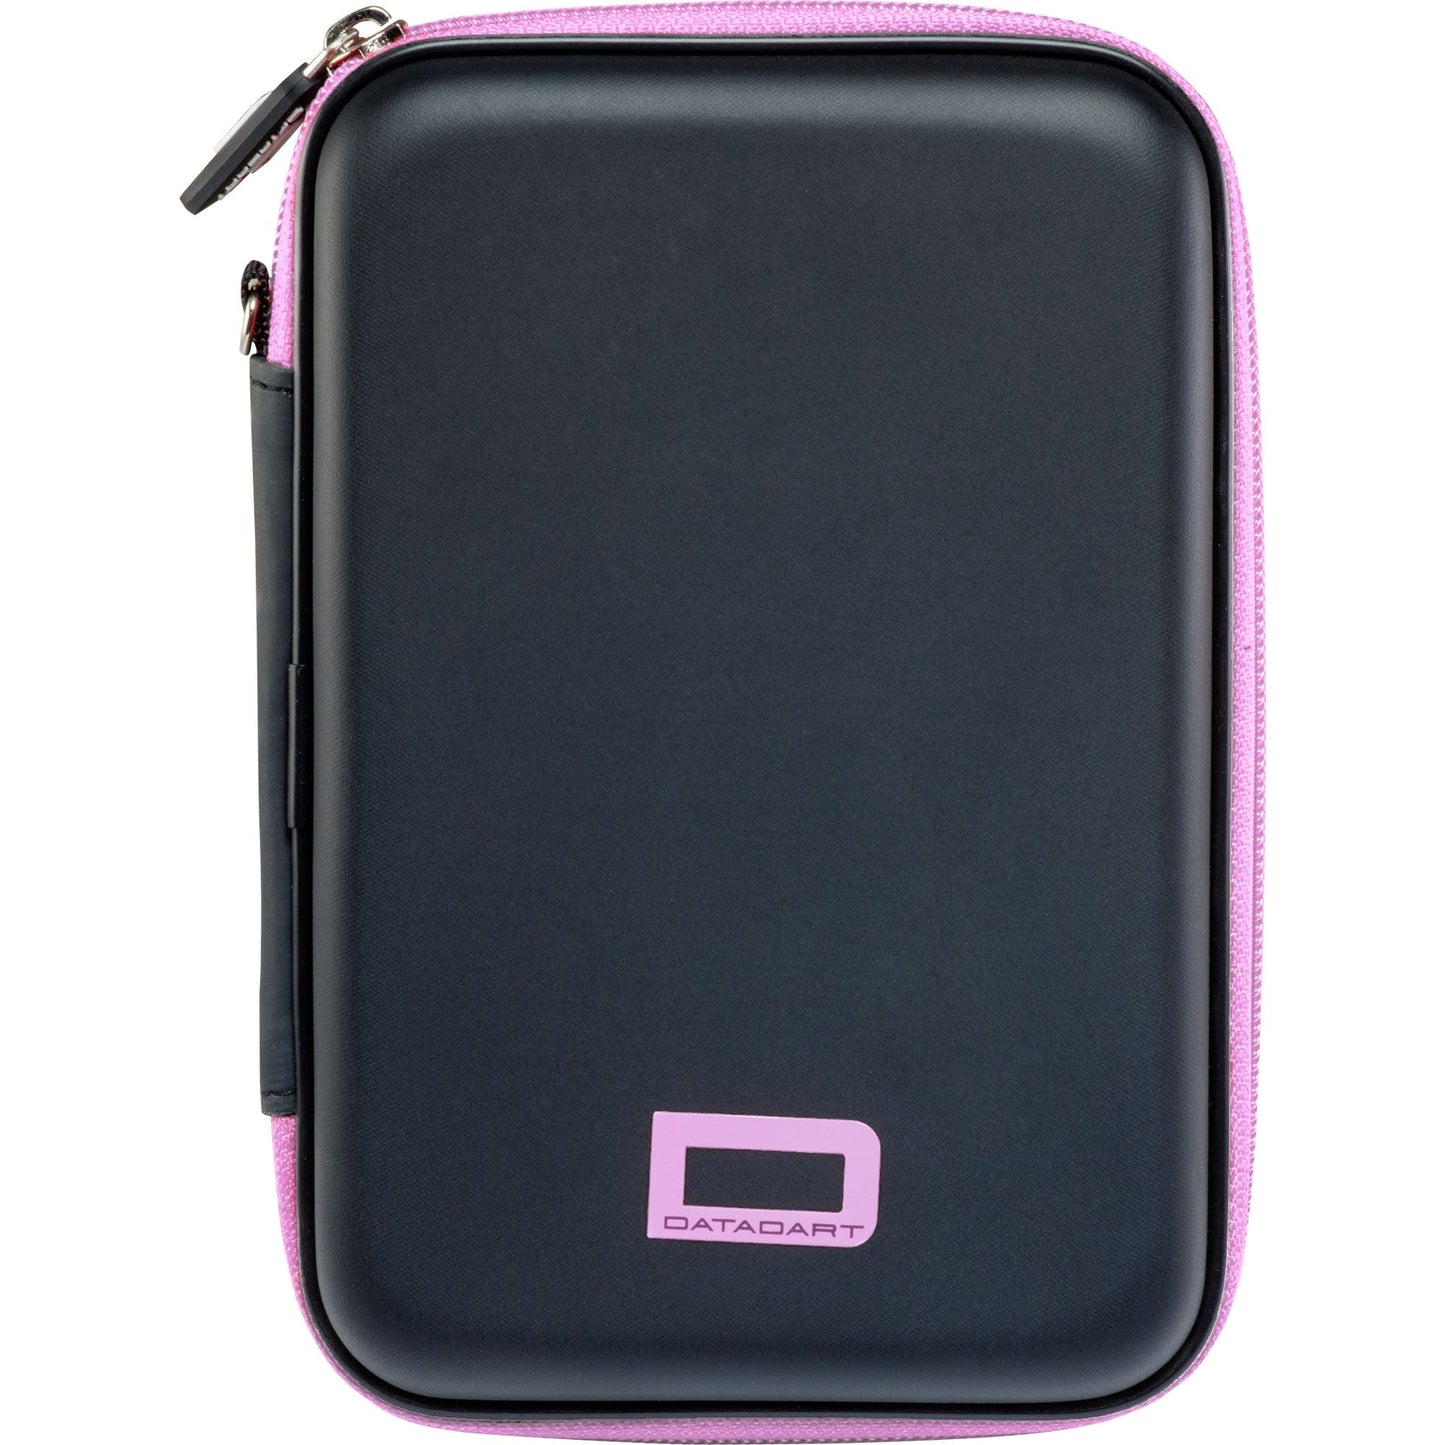 Datadart ProPac MAX Darts Case - Large EVA Case - Holds 2 Fully Assembled Sets Pink